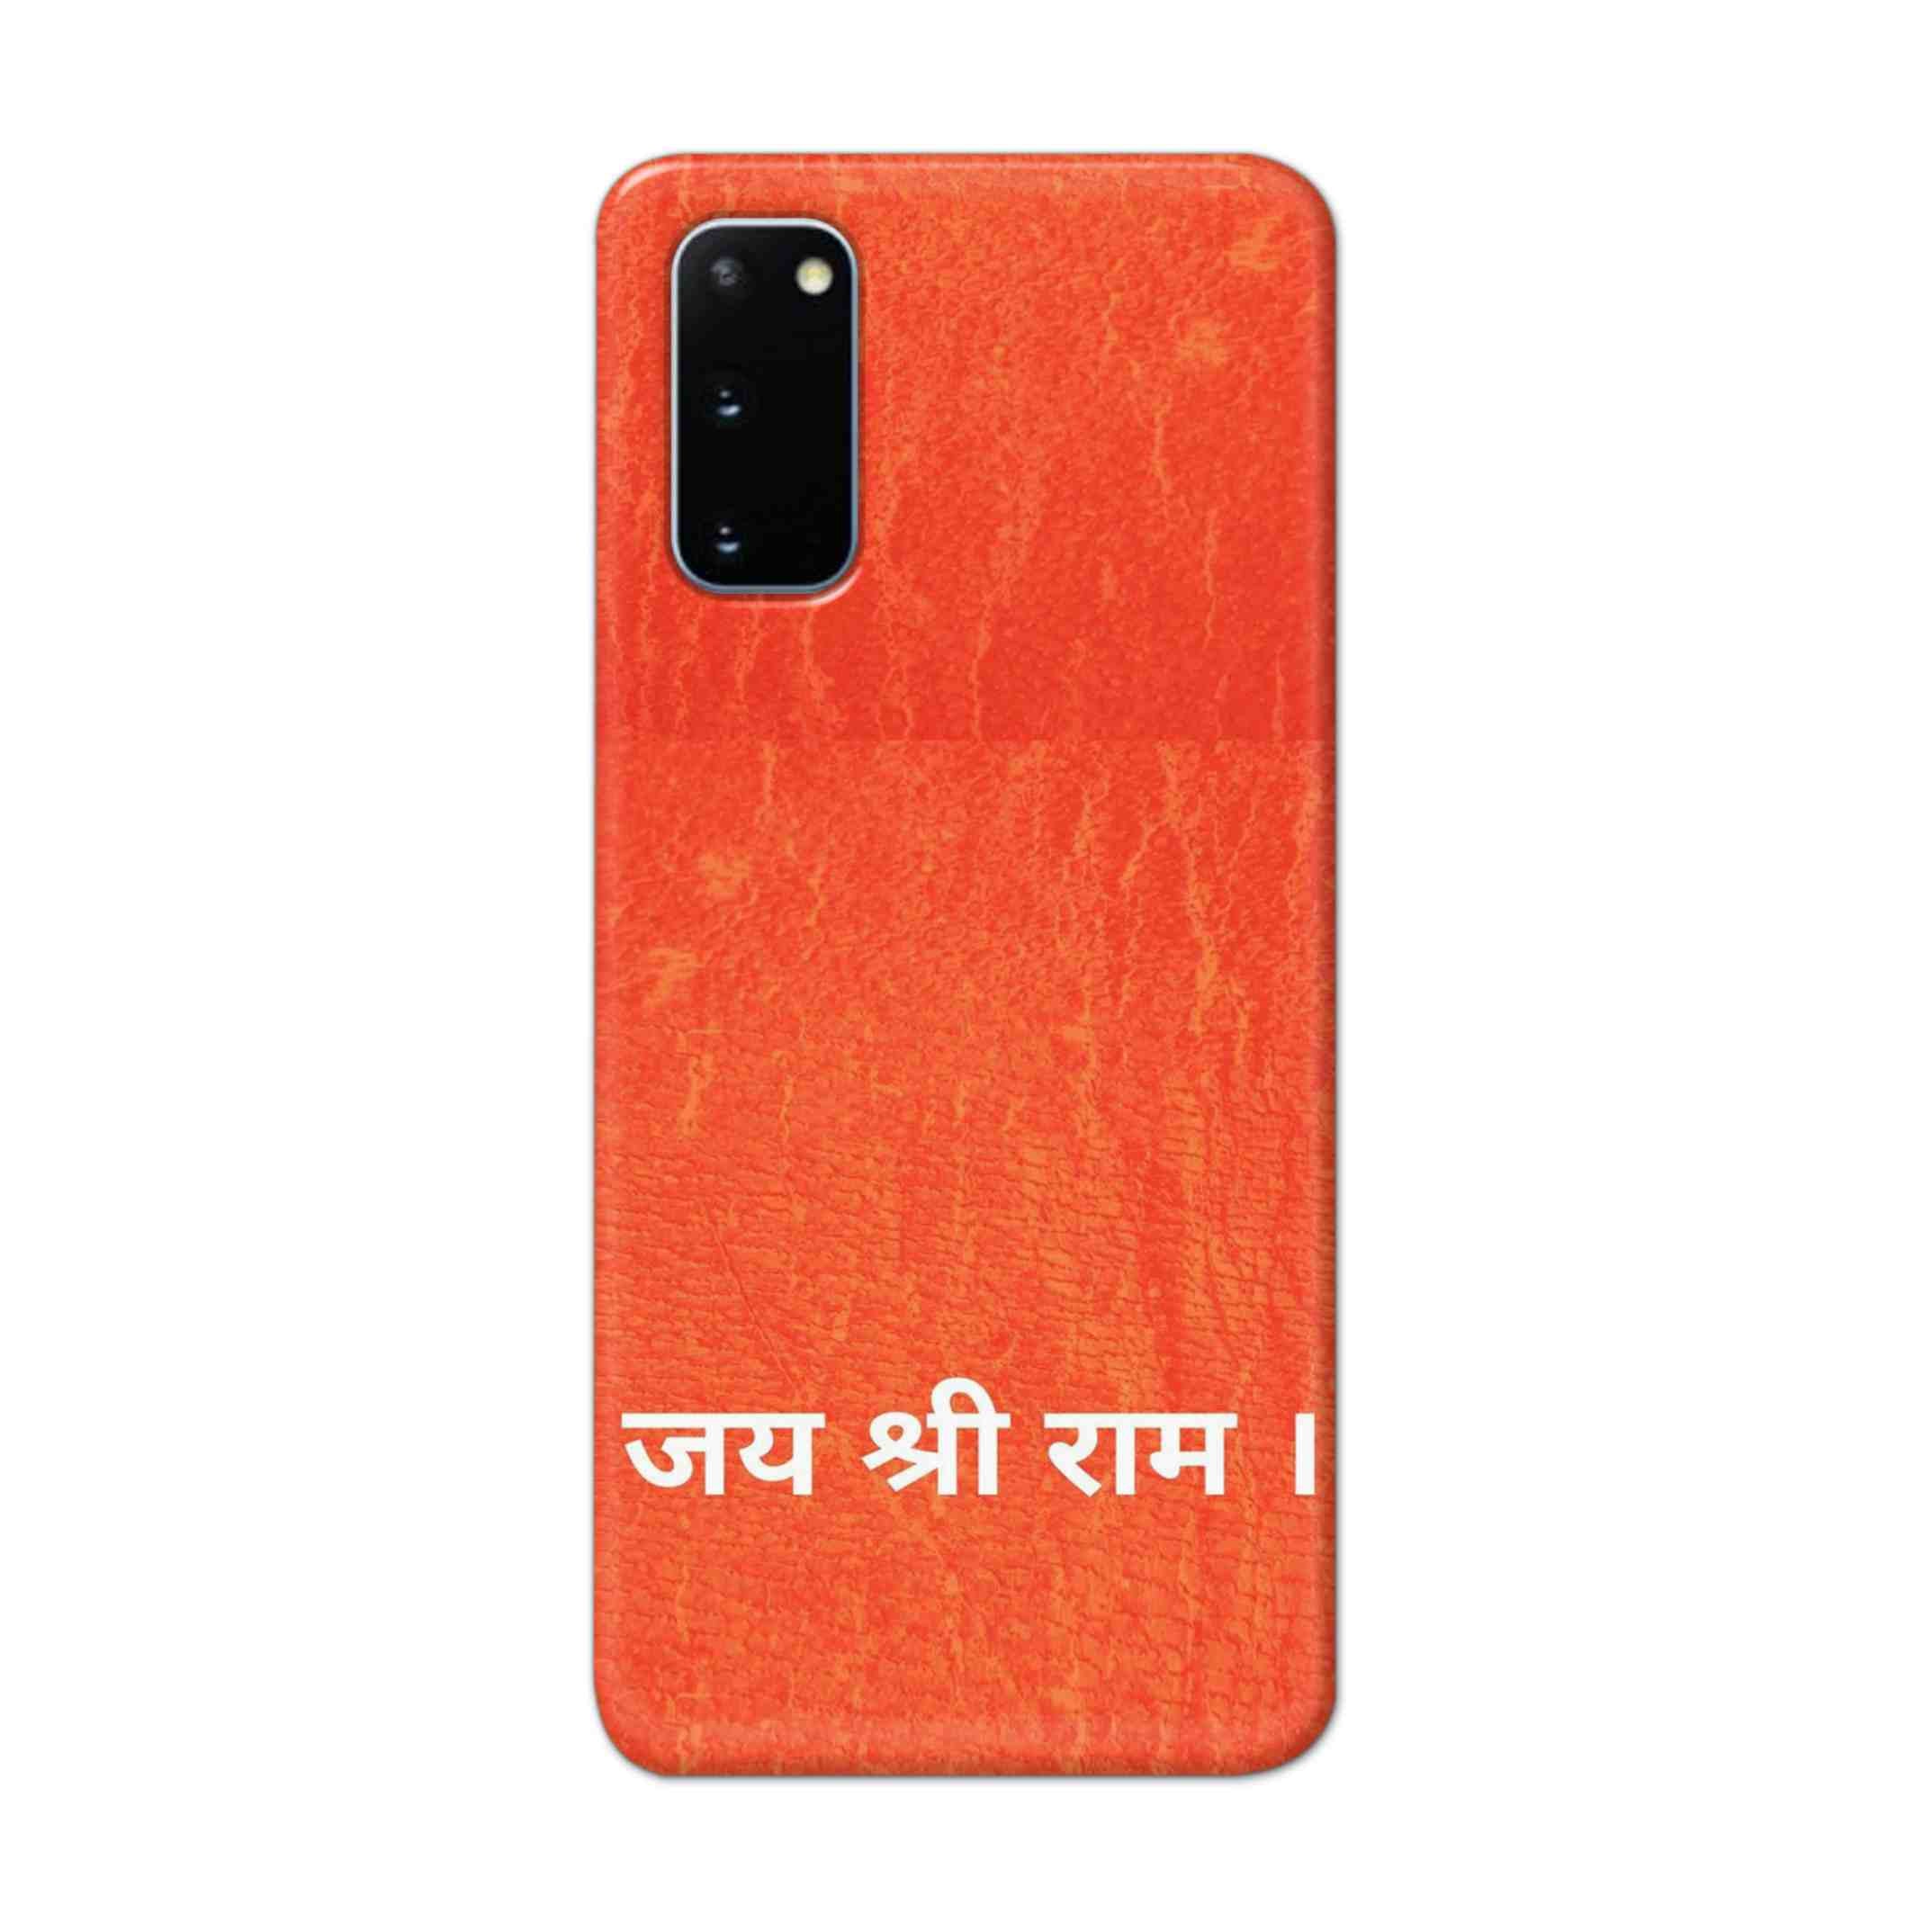 Buy Jai Shree Ram Hard Back Mobile Phone Case Cover For Samsung Galaxy S20 Online